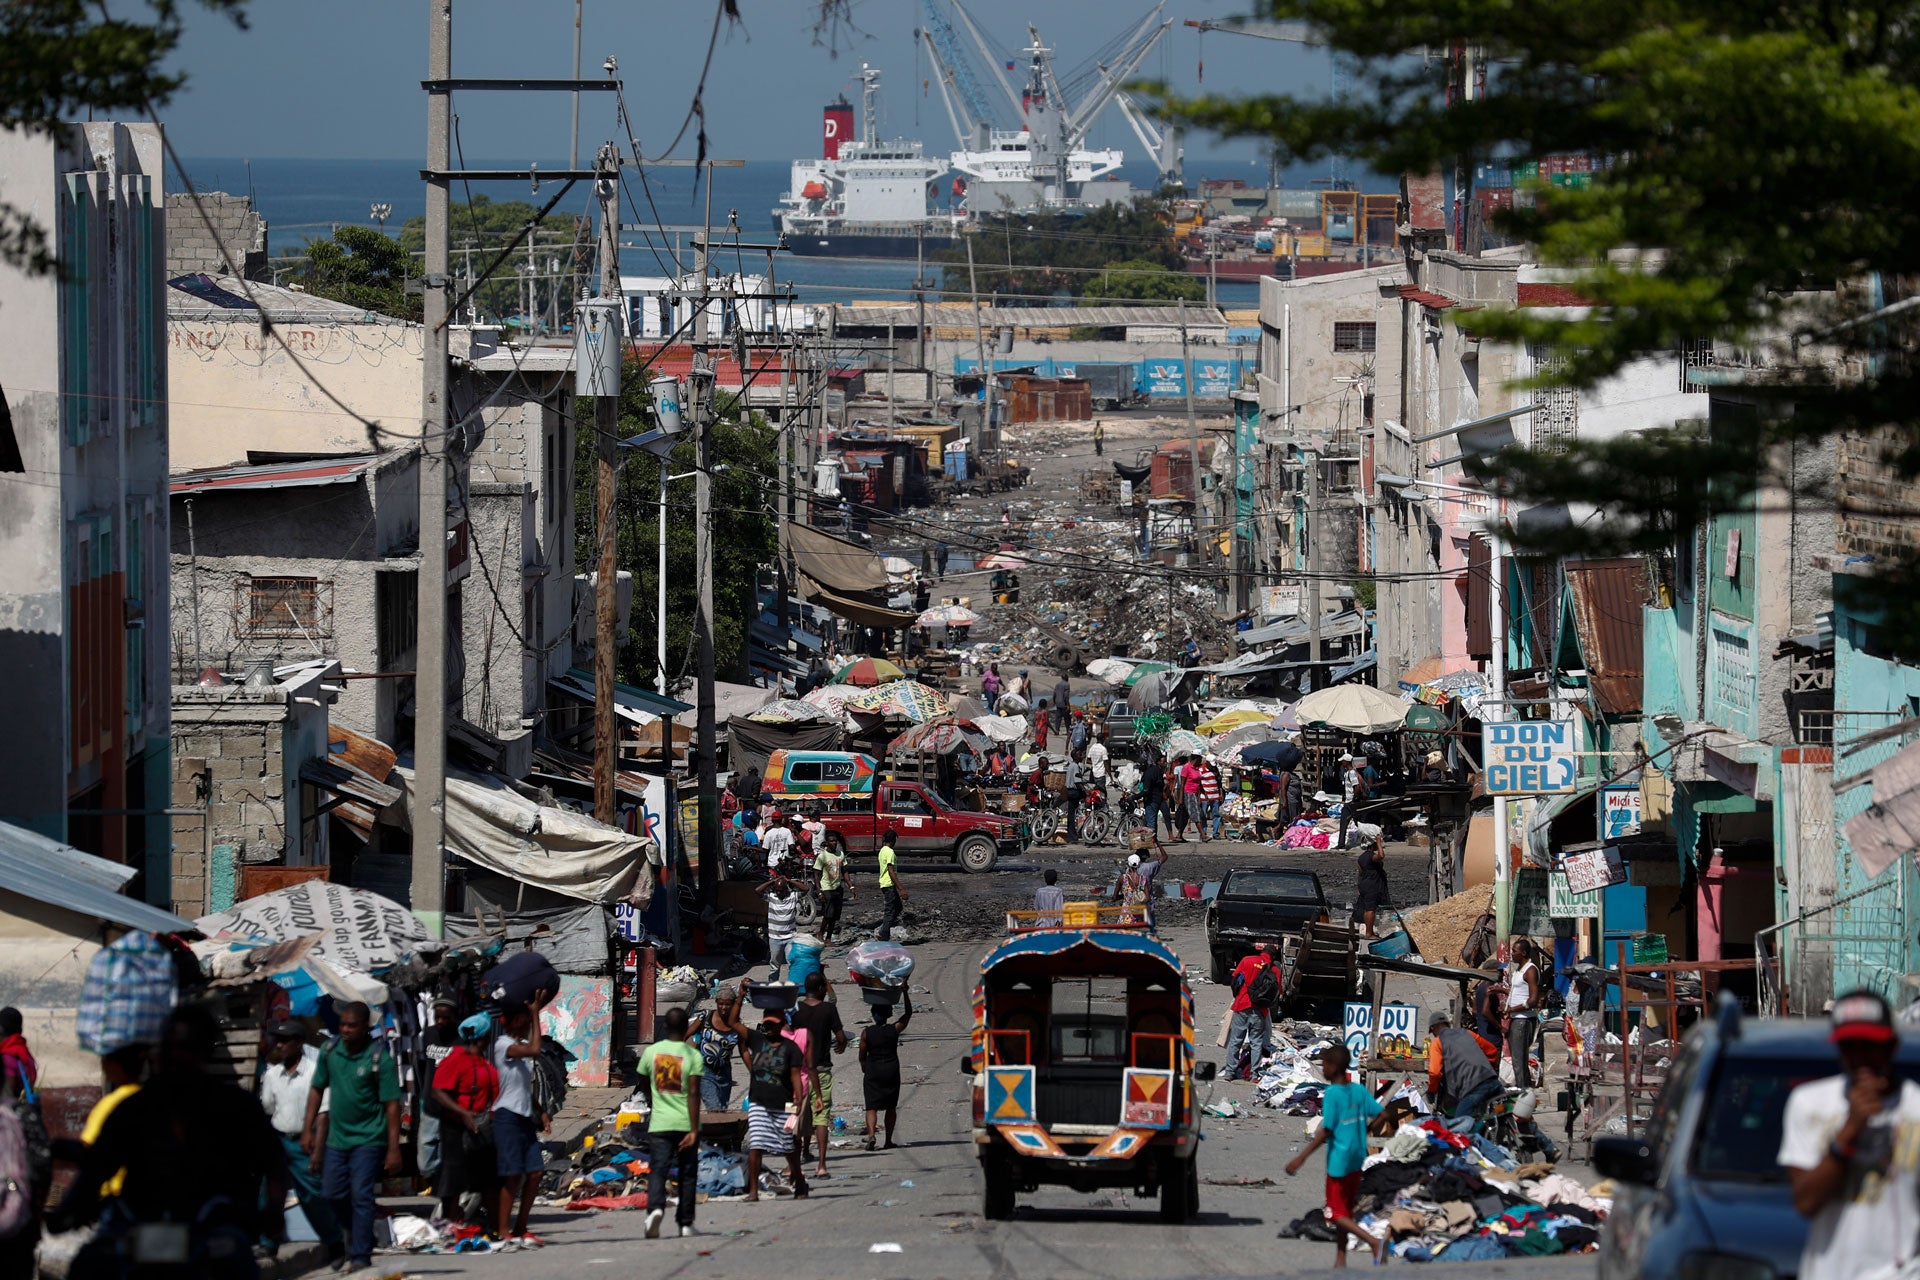 SOE Declared in Haiti as COVID-19 Cases, Deaths Rise